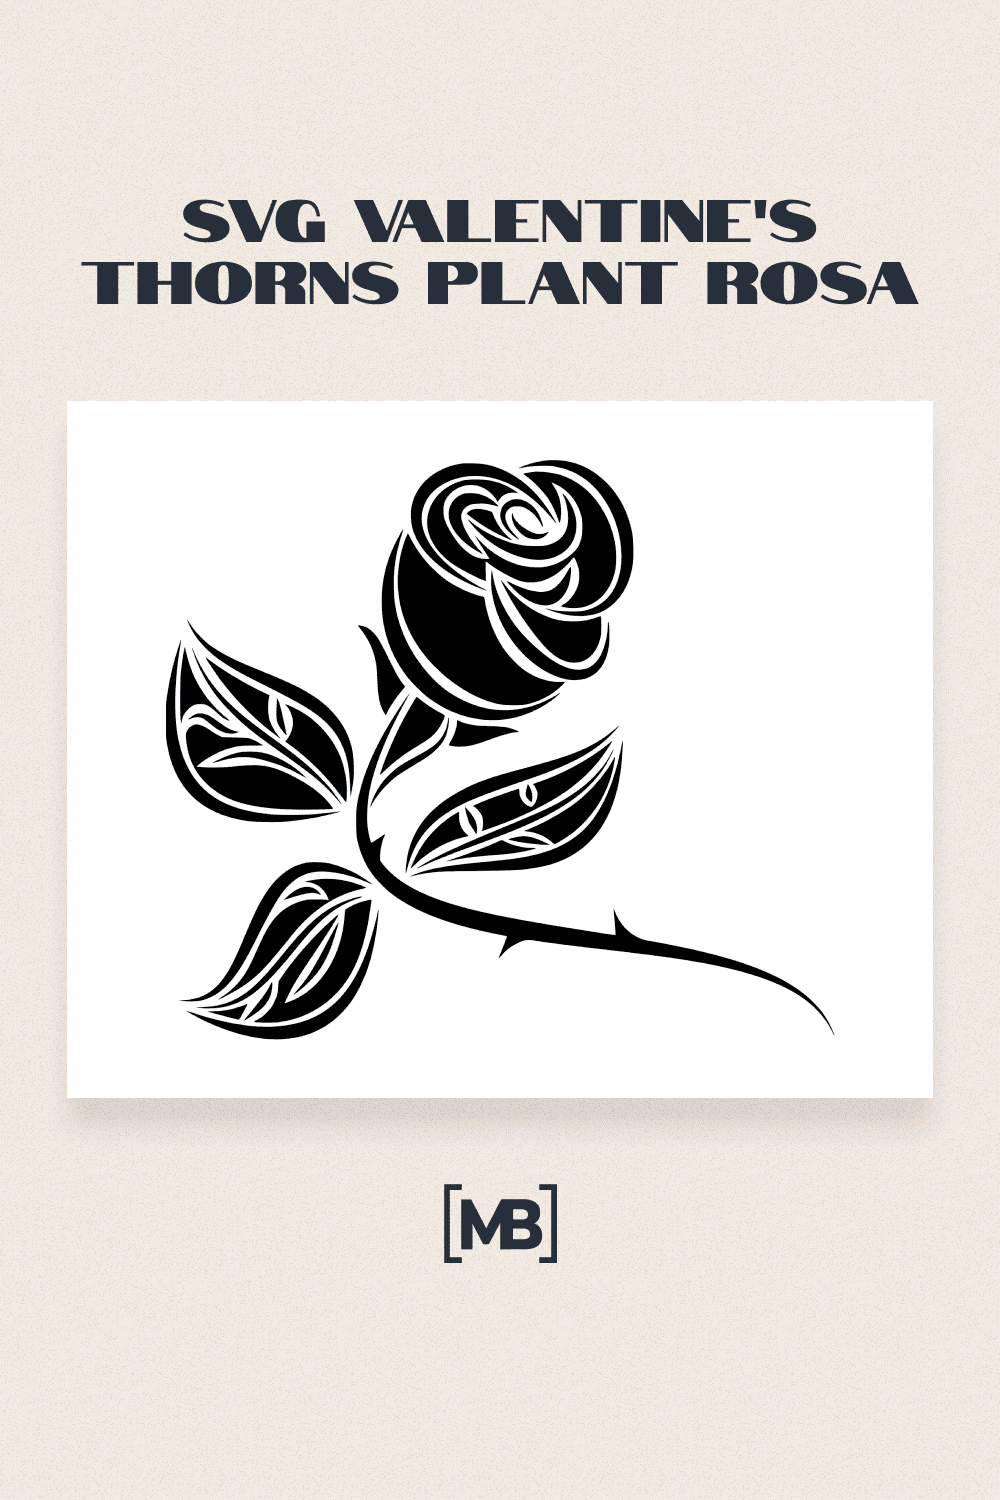 SVG valentine's thorns plant rosa.